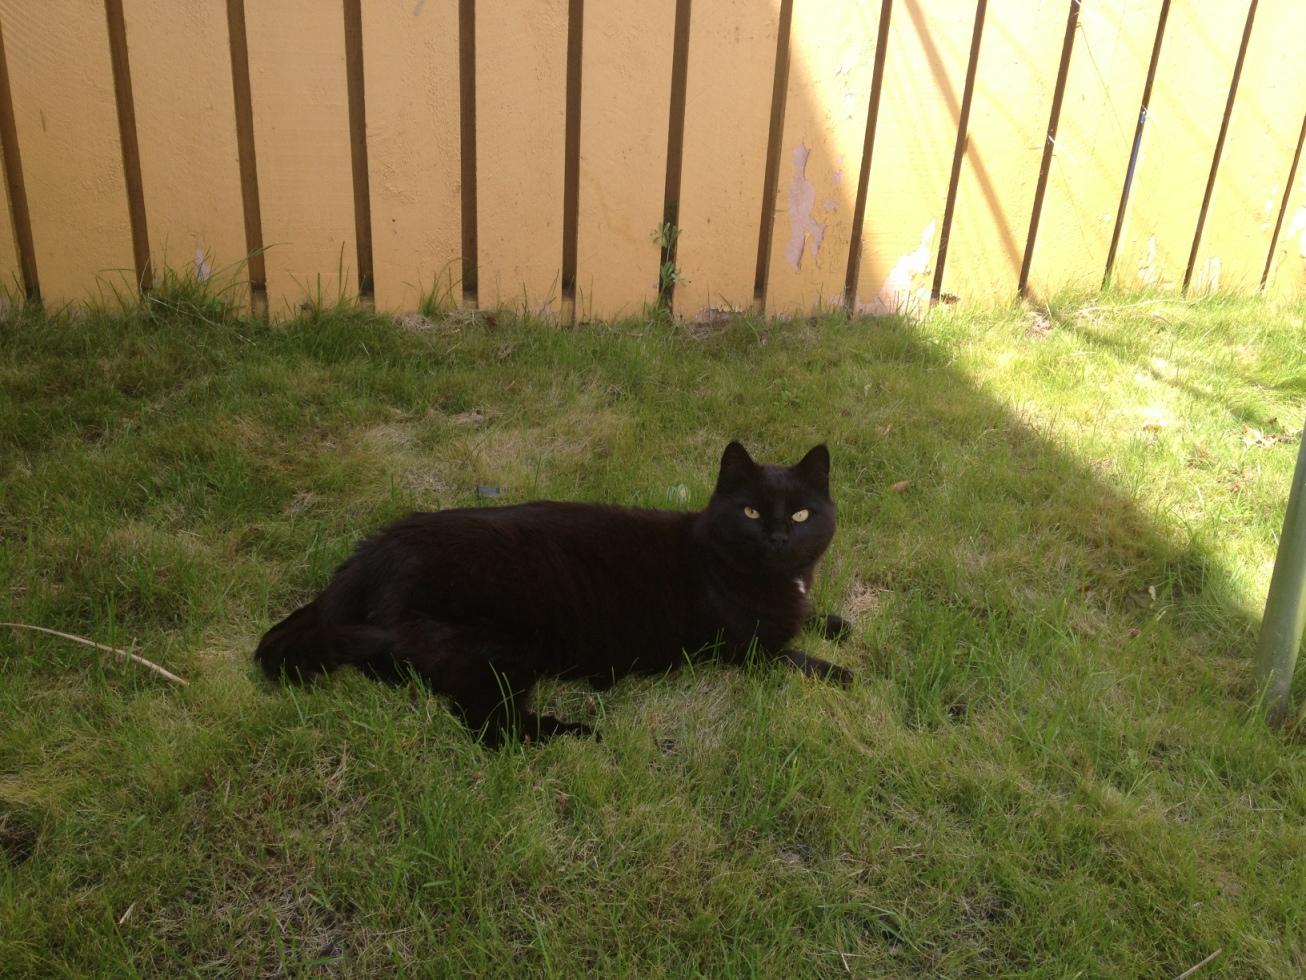 Katten njuter av sommaren i gräset.